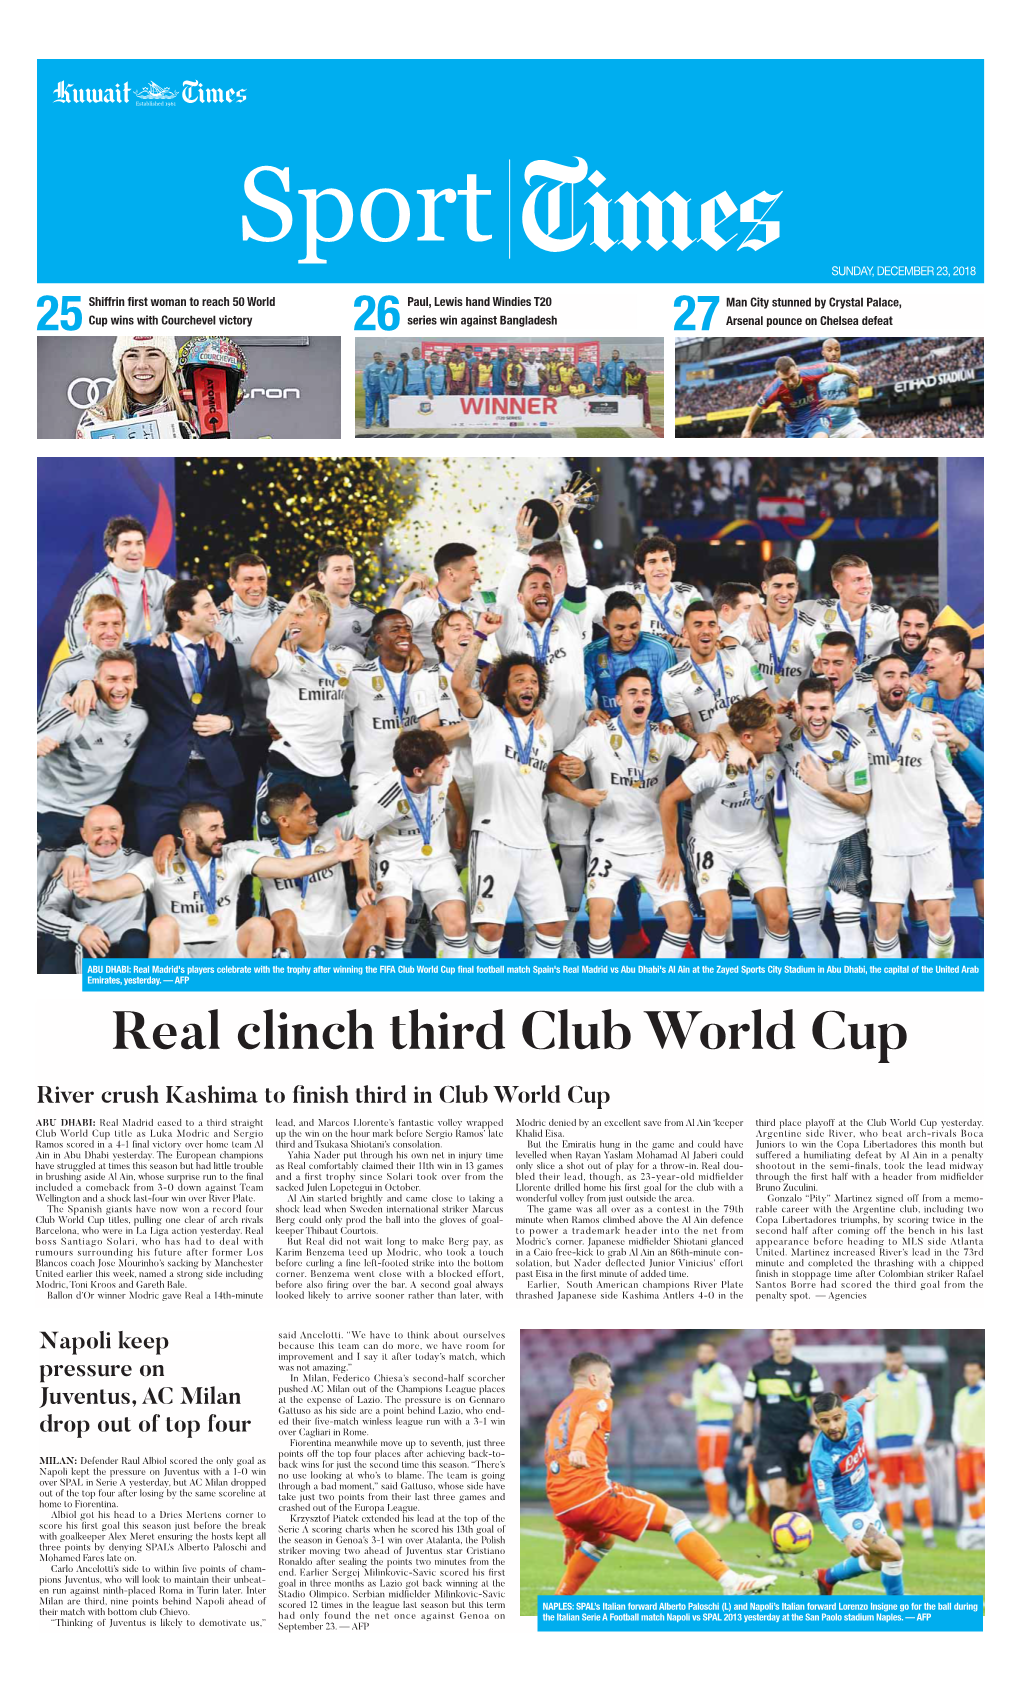 Real Clinch Third Club World Cup